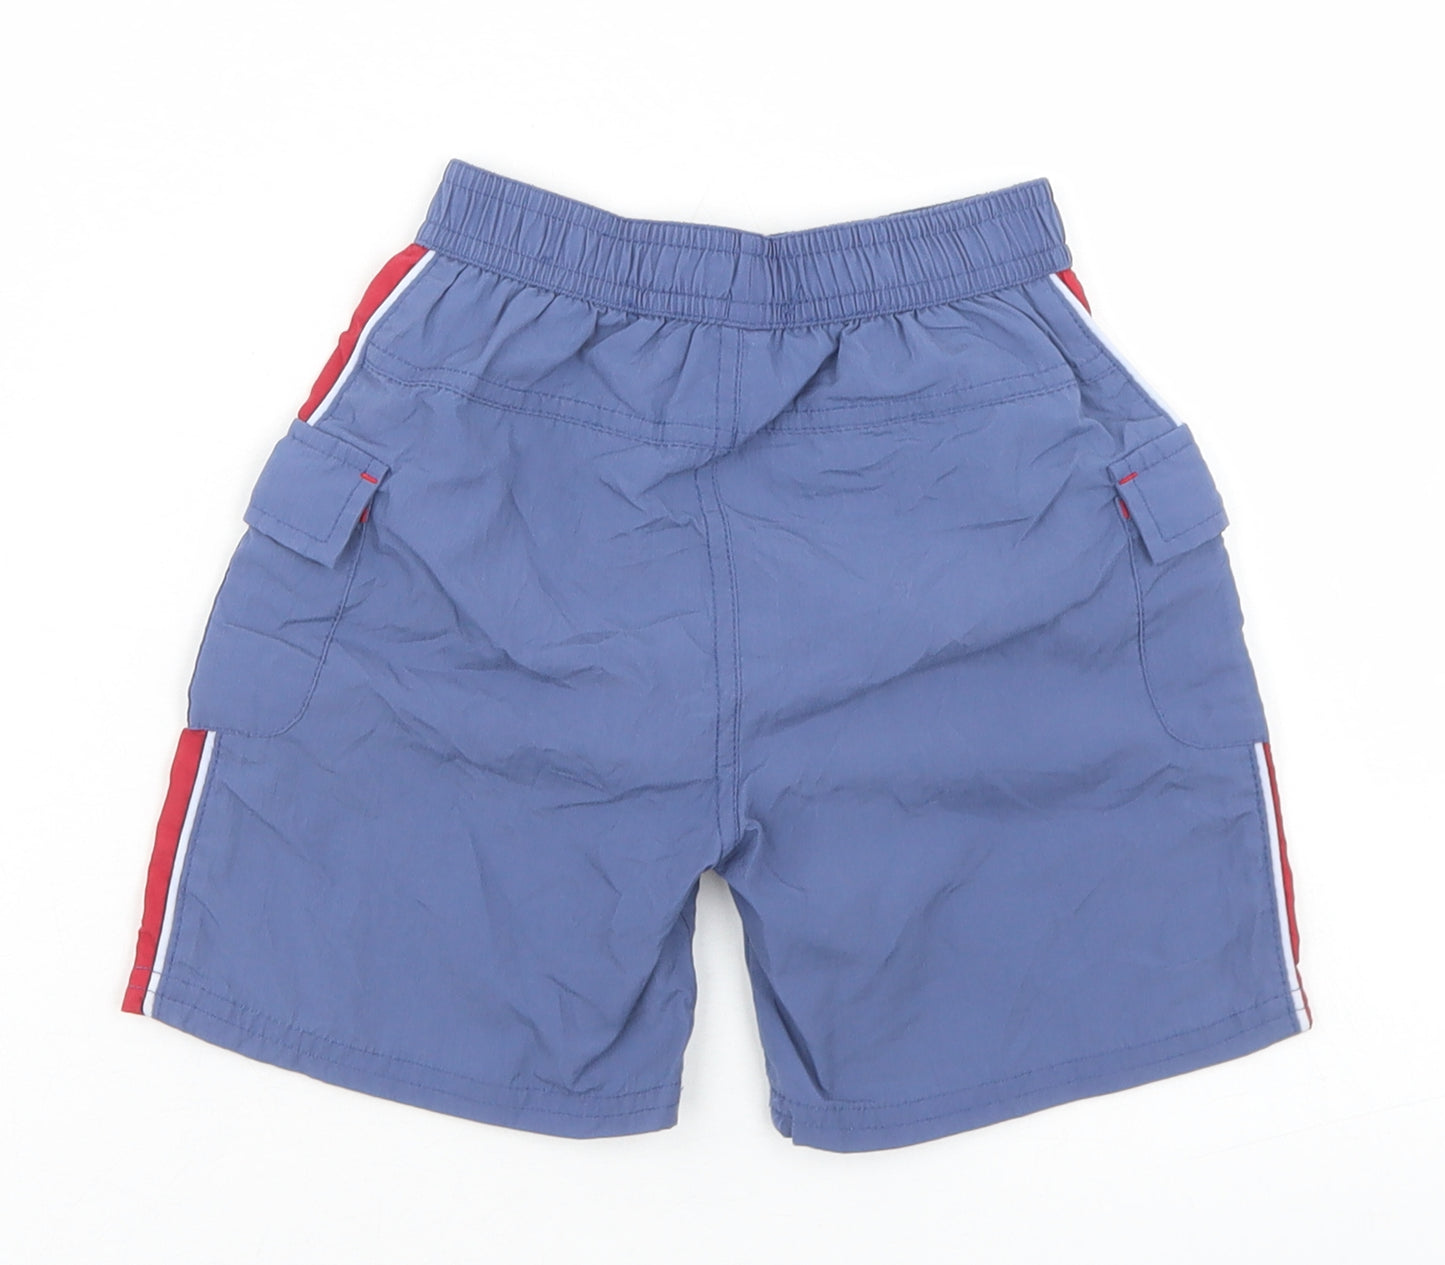 Dunnes Stores Boys Blue Colourblock Nylon Sweat Shorts Size 2-3 Years  Regular Drawstring